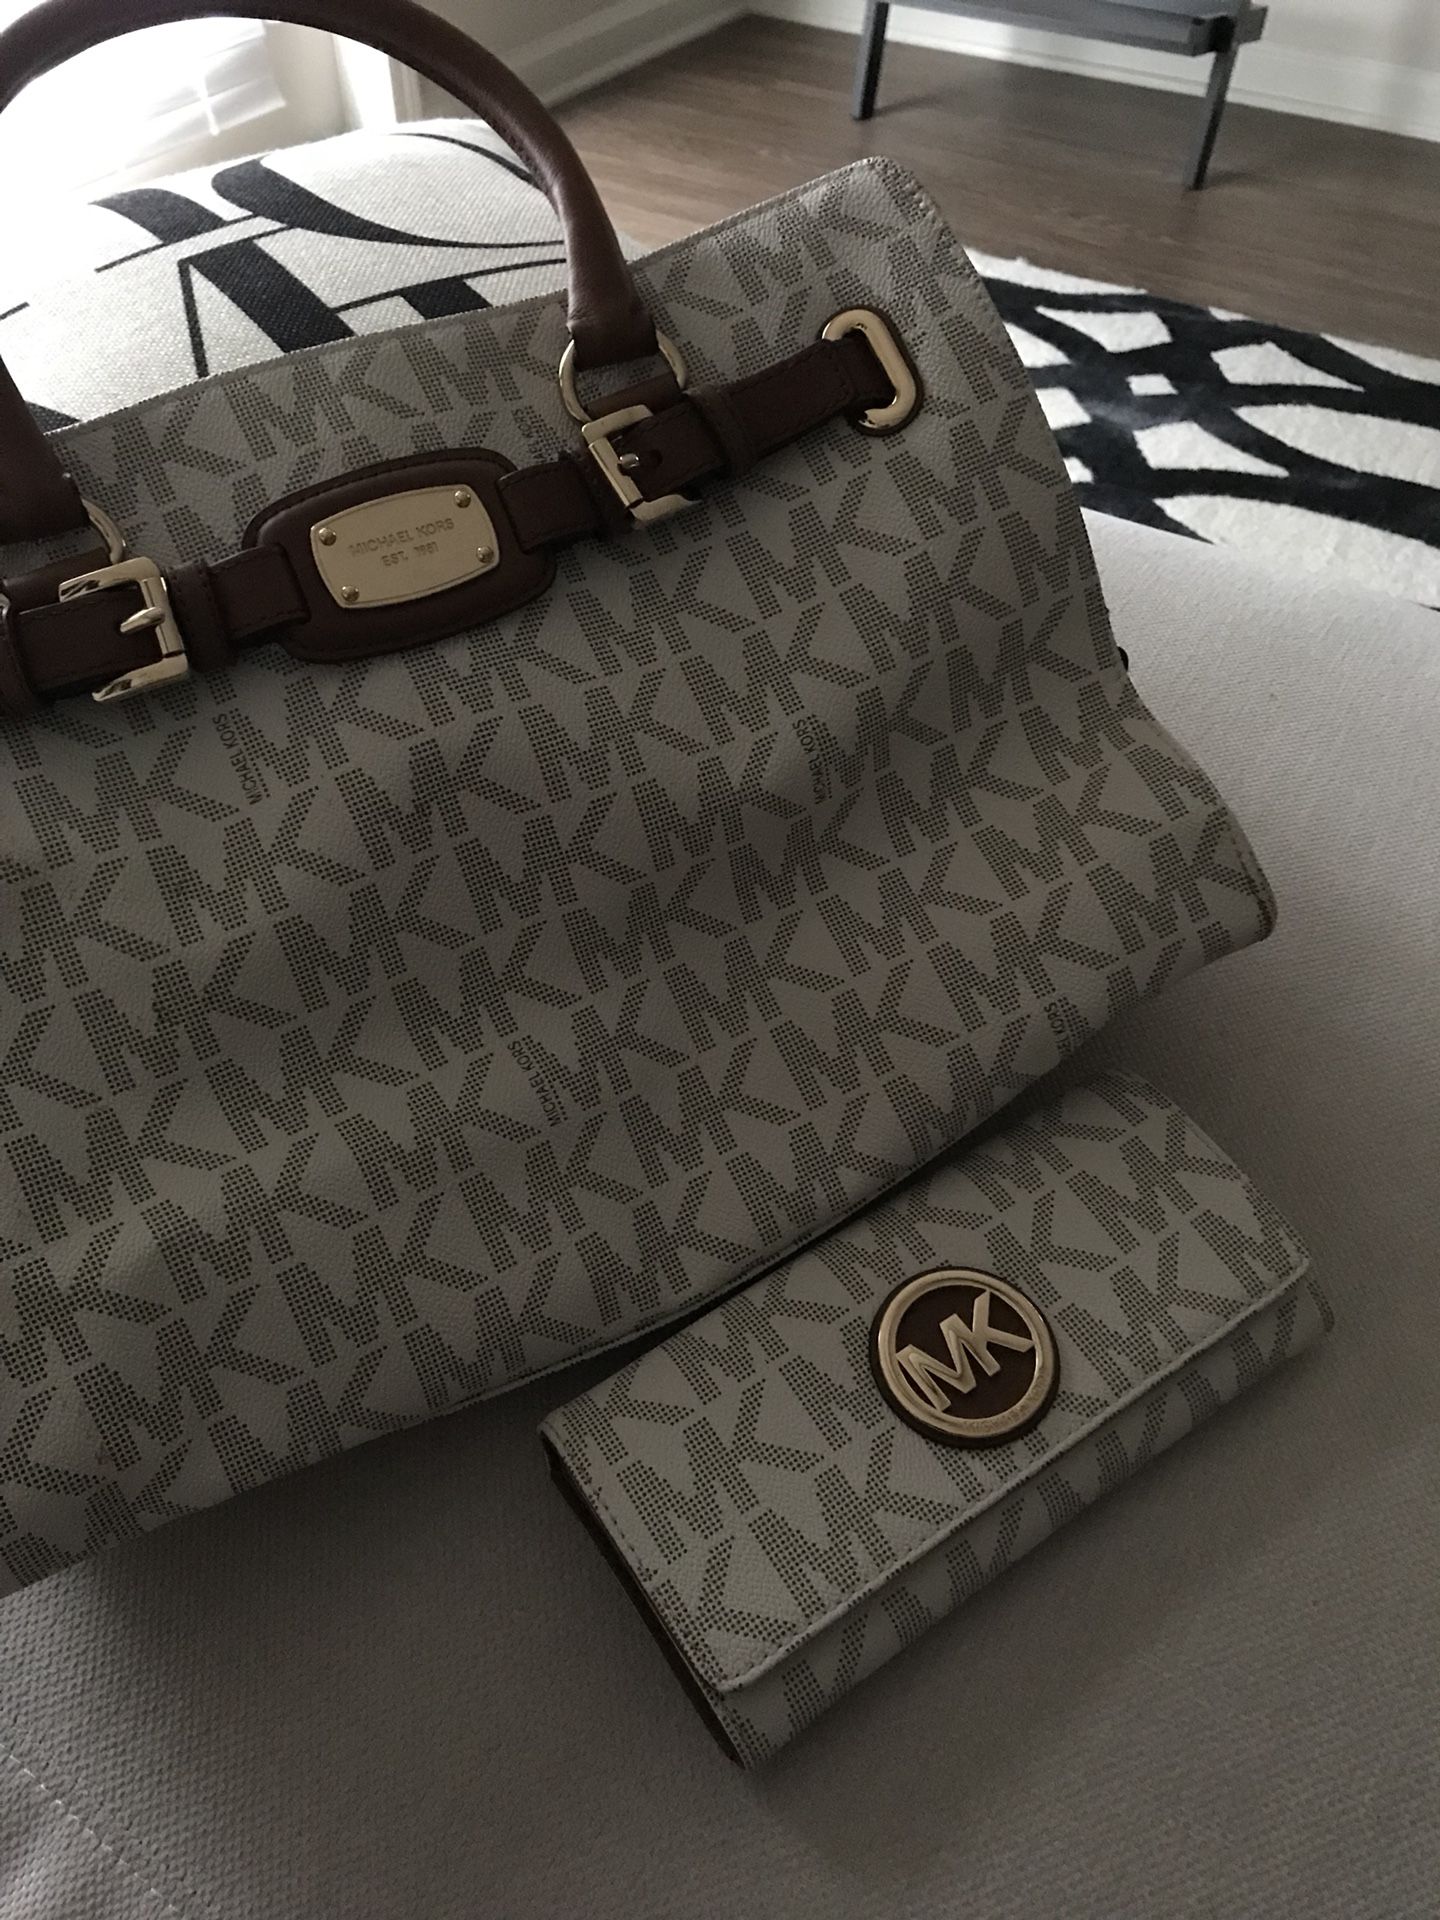 Michael Kors Logo Bag and wallet